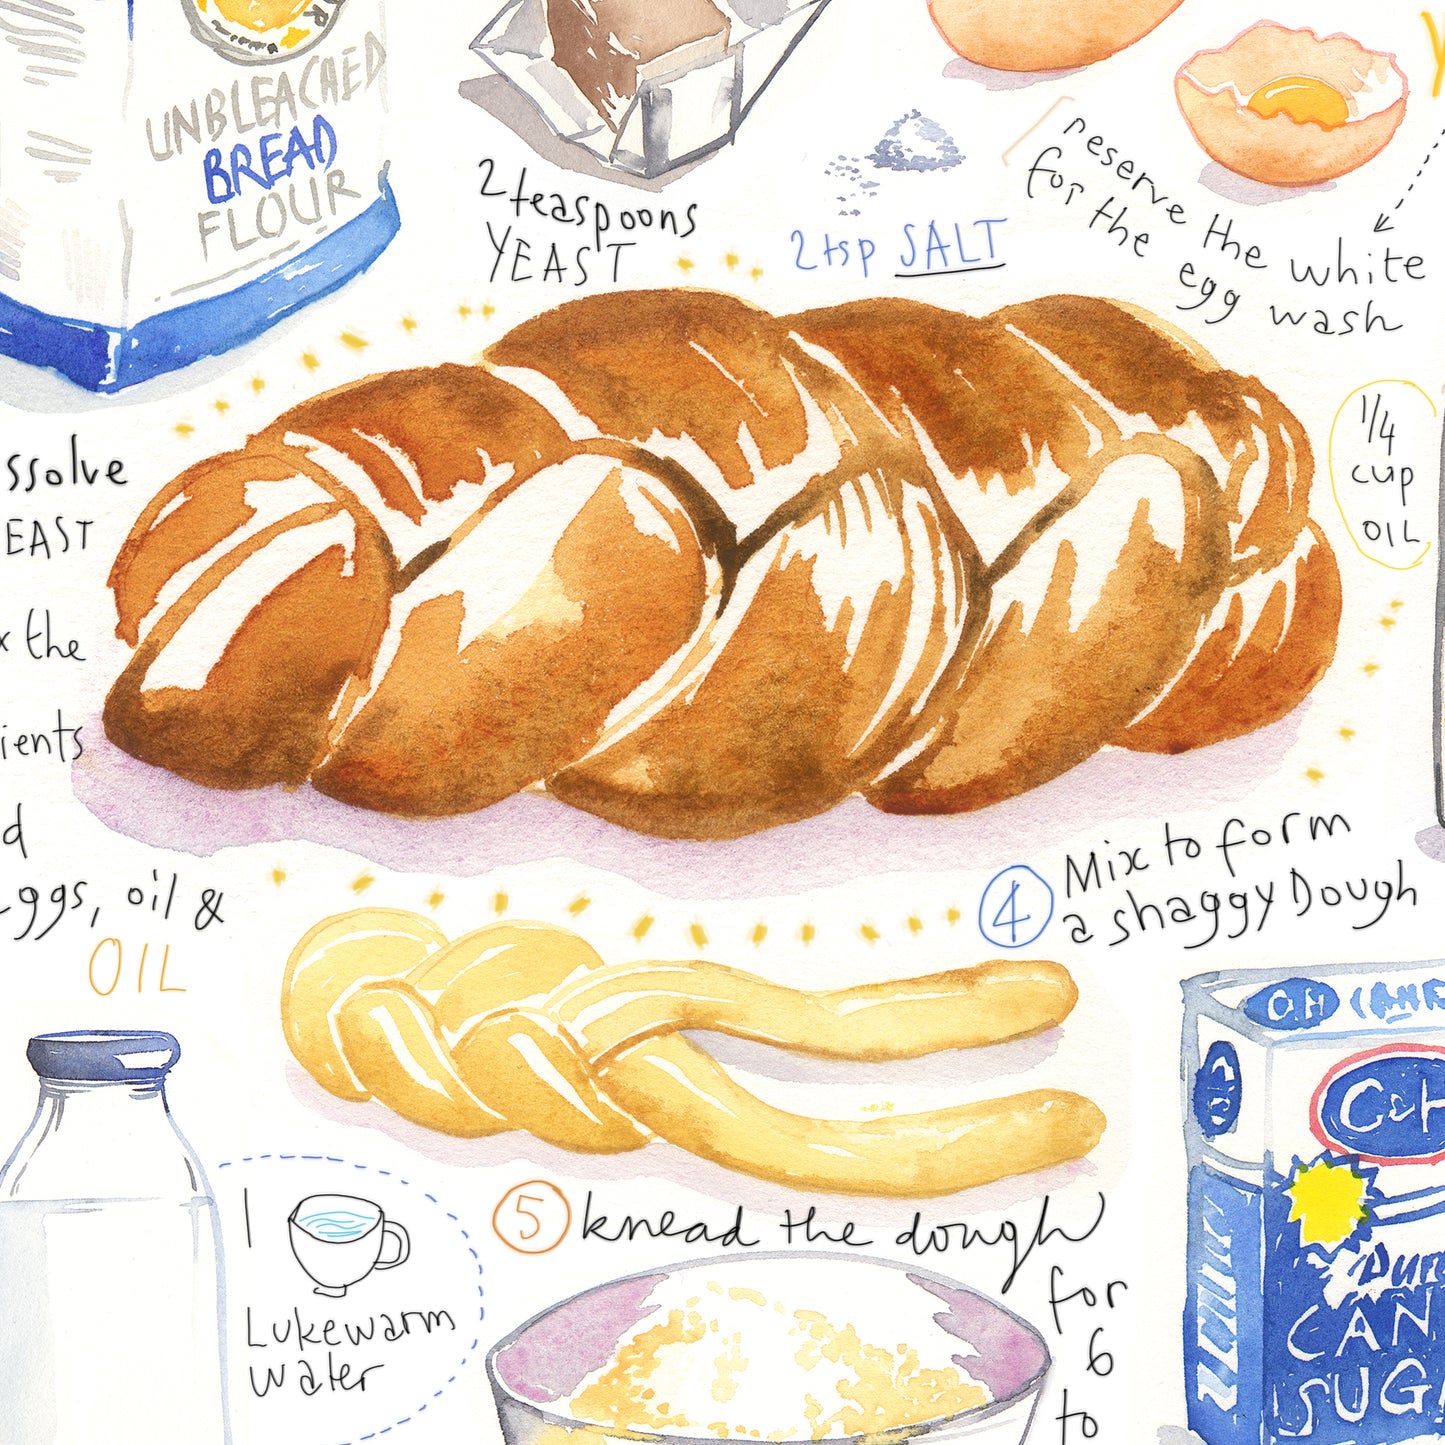 Challah bread recipe print